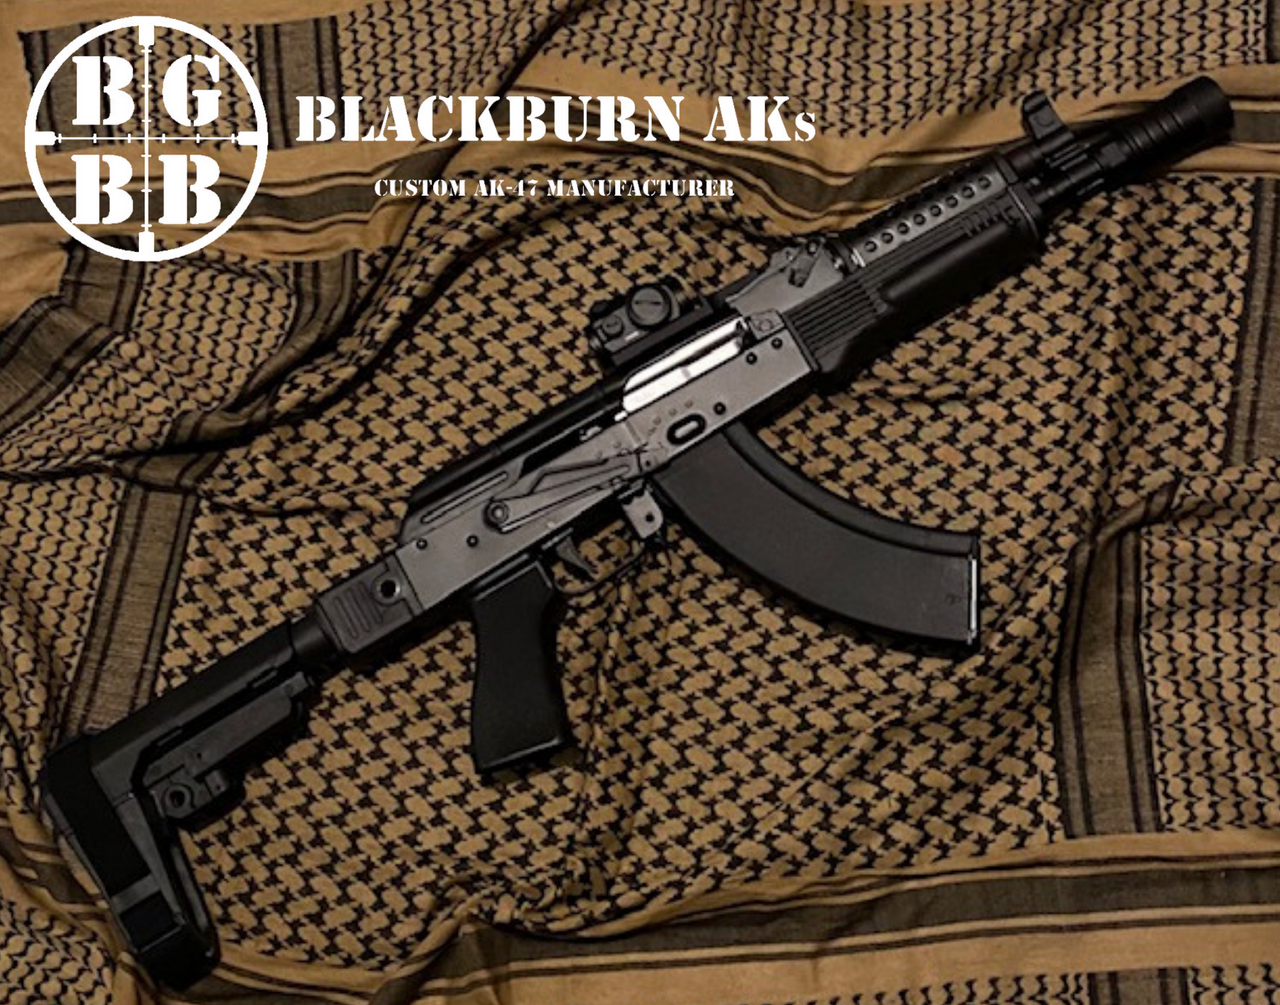 Fightin' Iron: The AK-47 Pattern Rifle